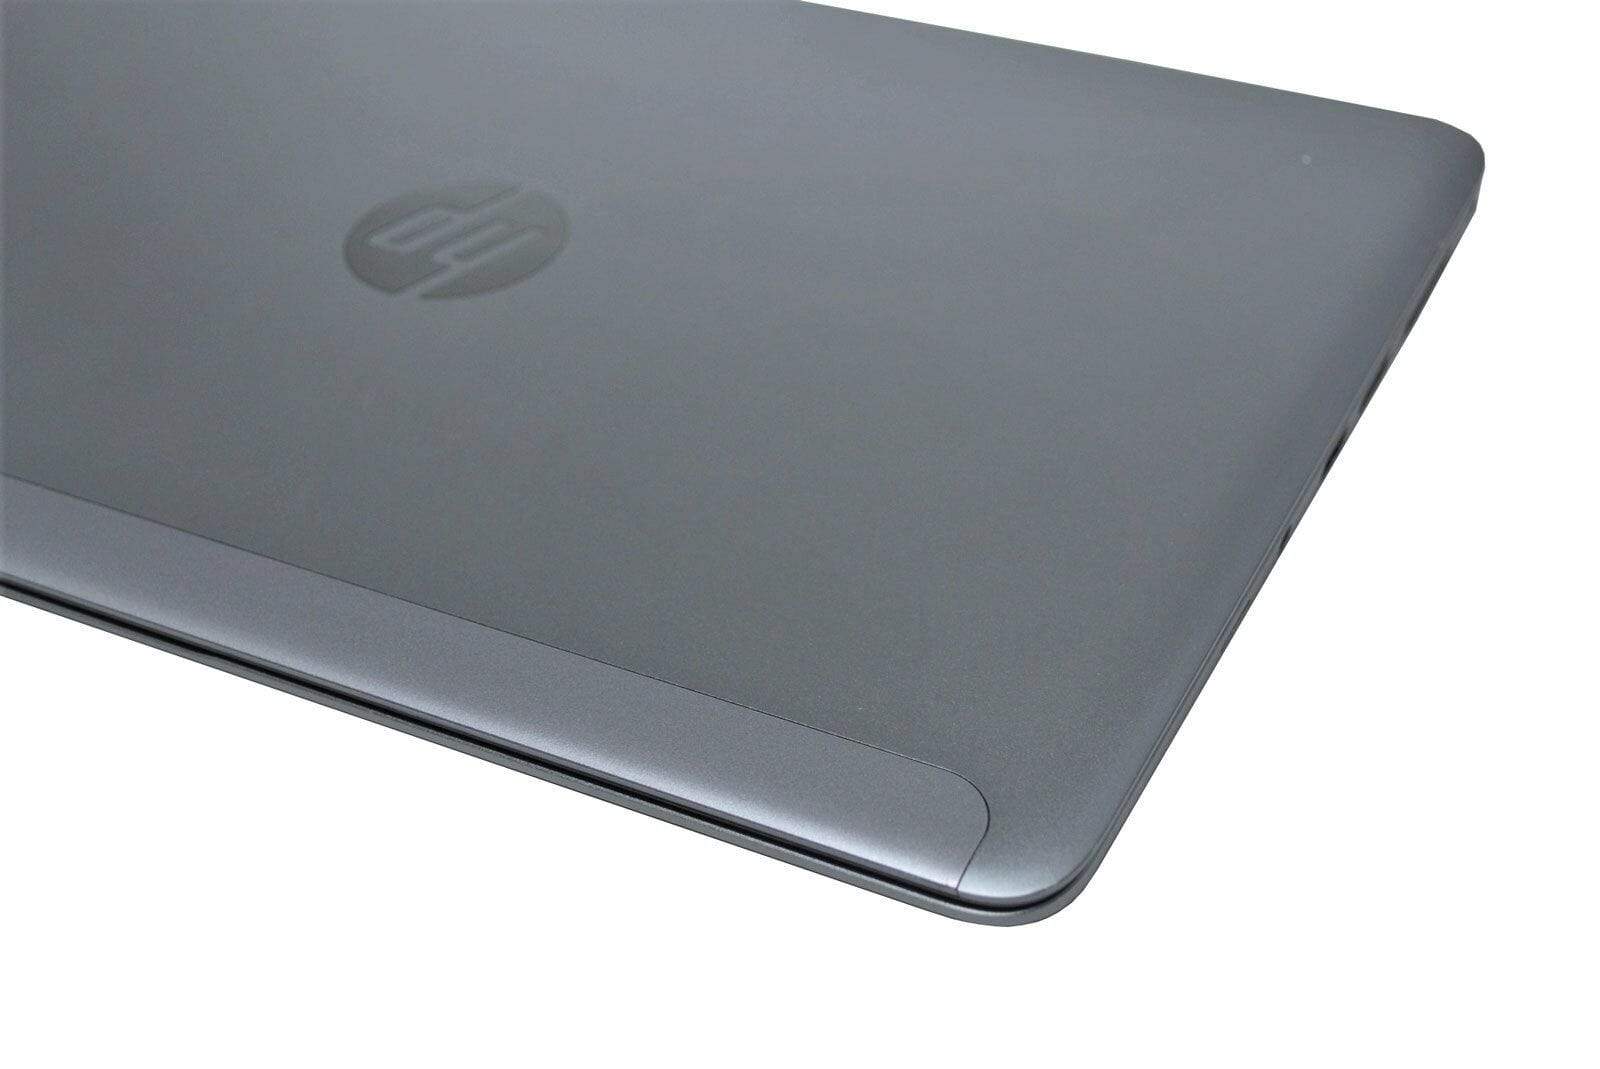 HP EliteBook 1040 Folio G1 UltraBook: 240GB RAM, 8GB RAM, VAT, Warranty, 1.49KG - CruiseTech